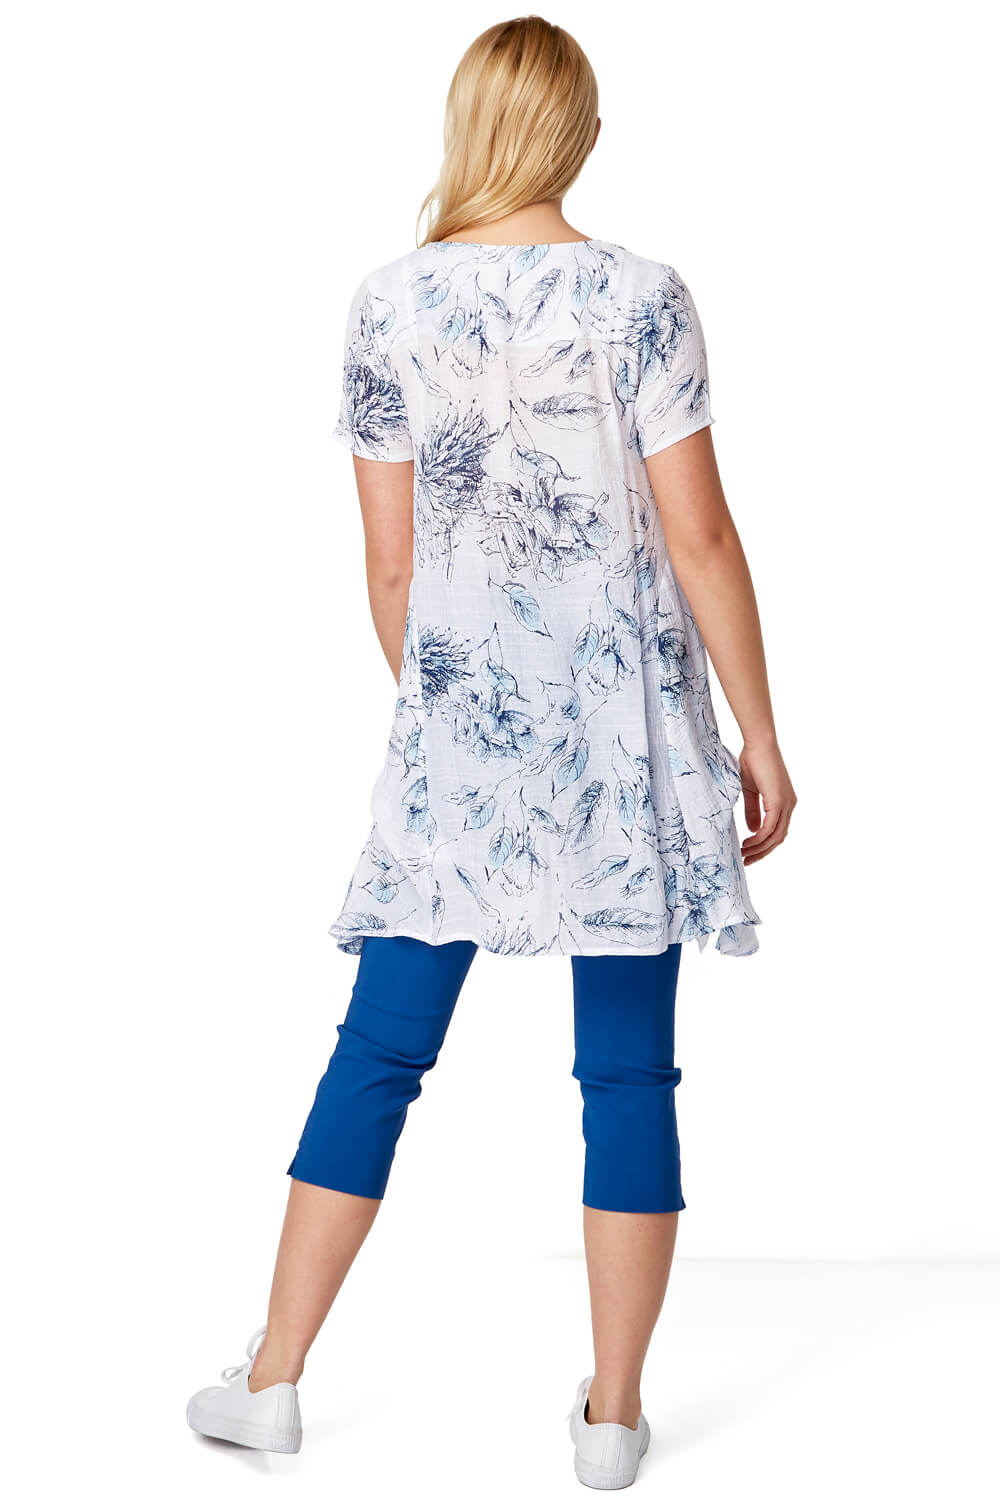 Short Sleeve Floral Crinkle Top in Blue - Roman Originals UK